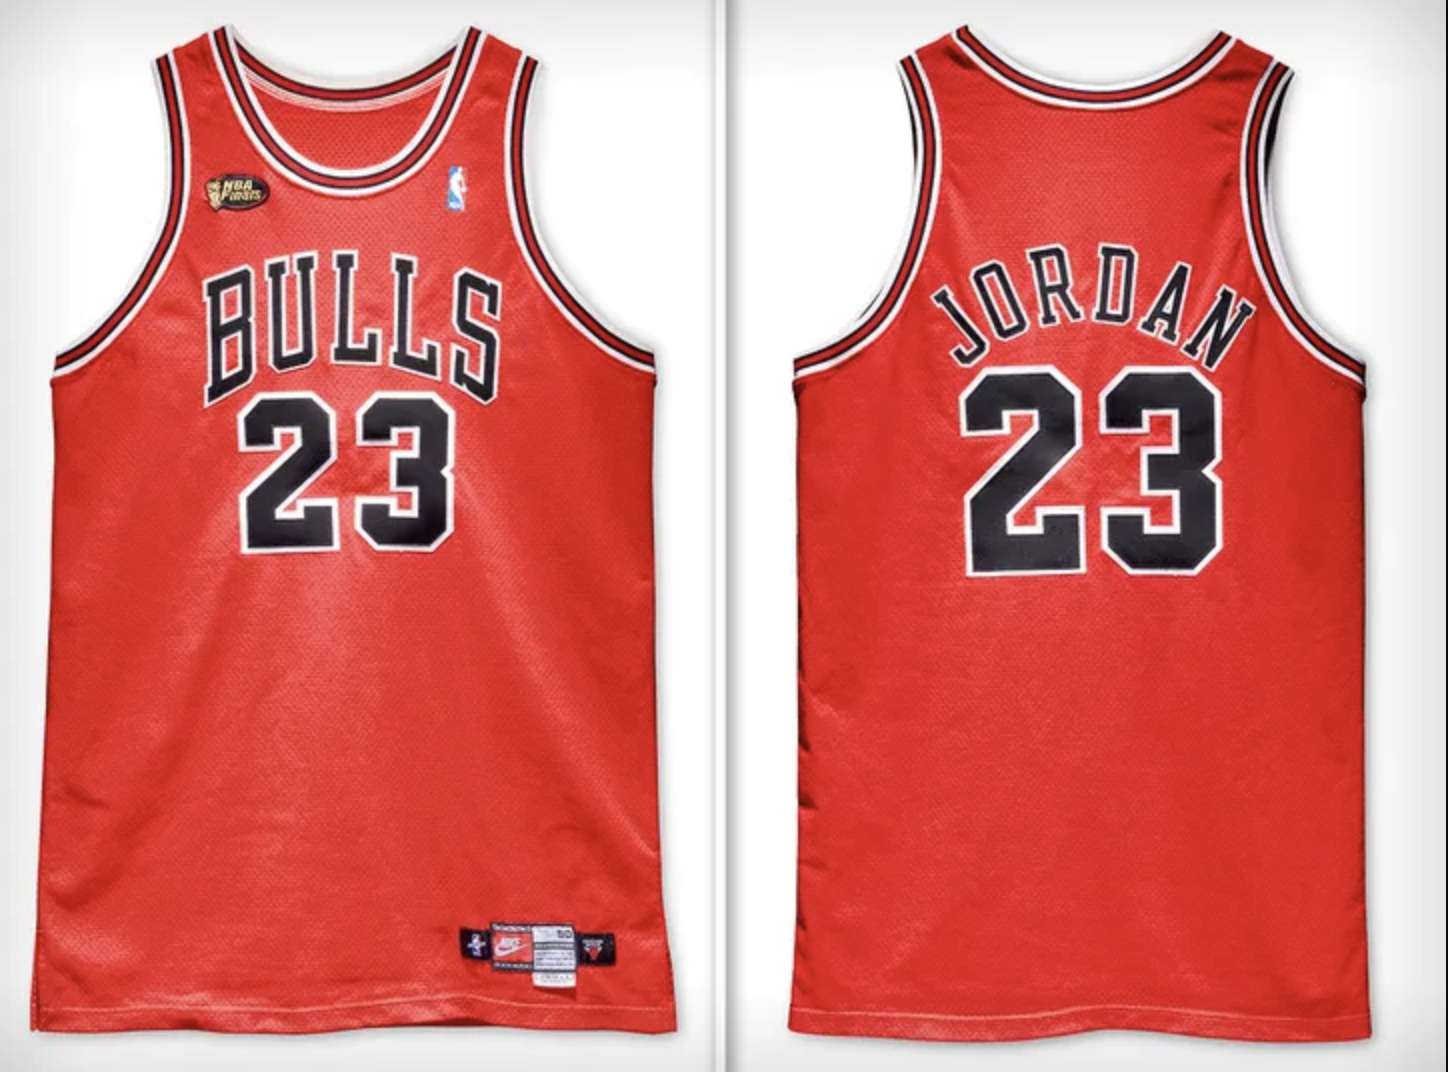 Michael Jordans 1998 Nba Finals Jersey Is Going Up For Auction